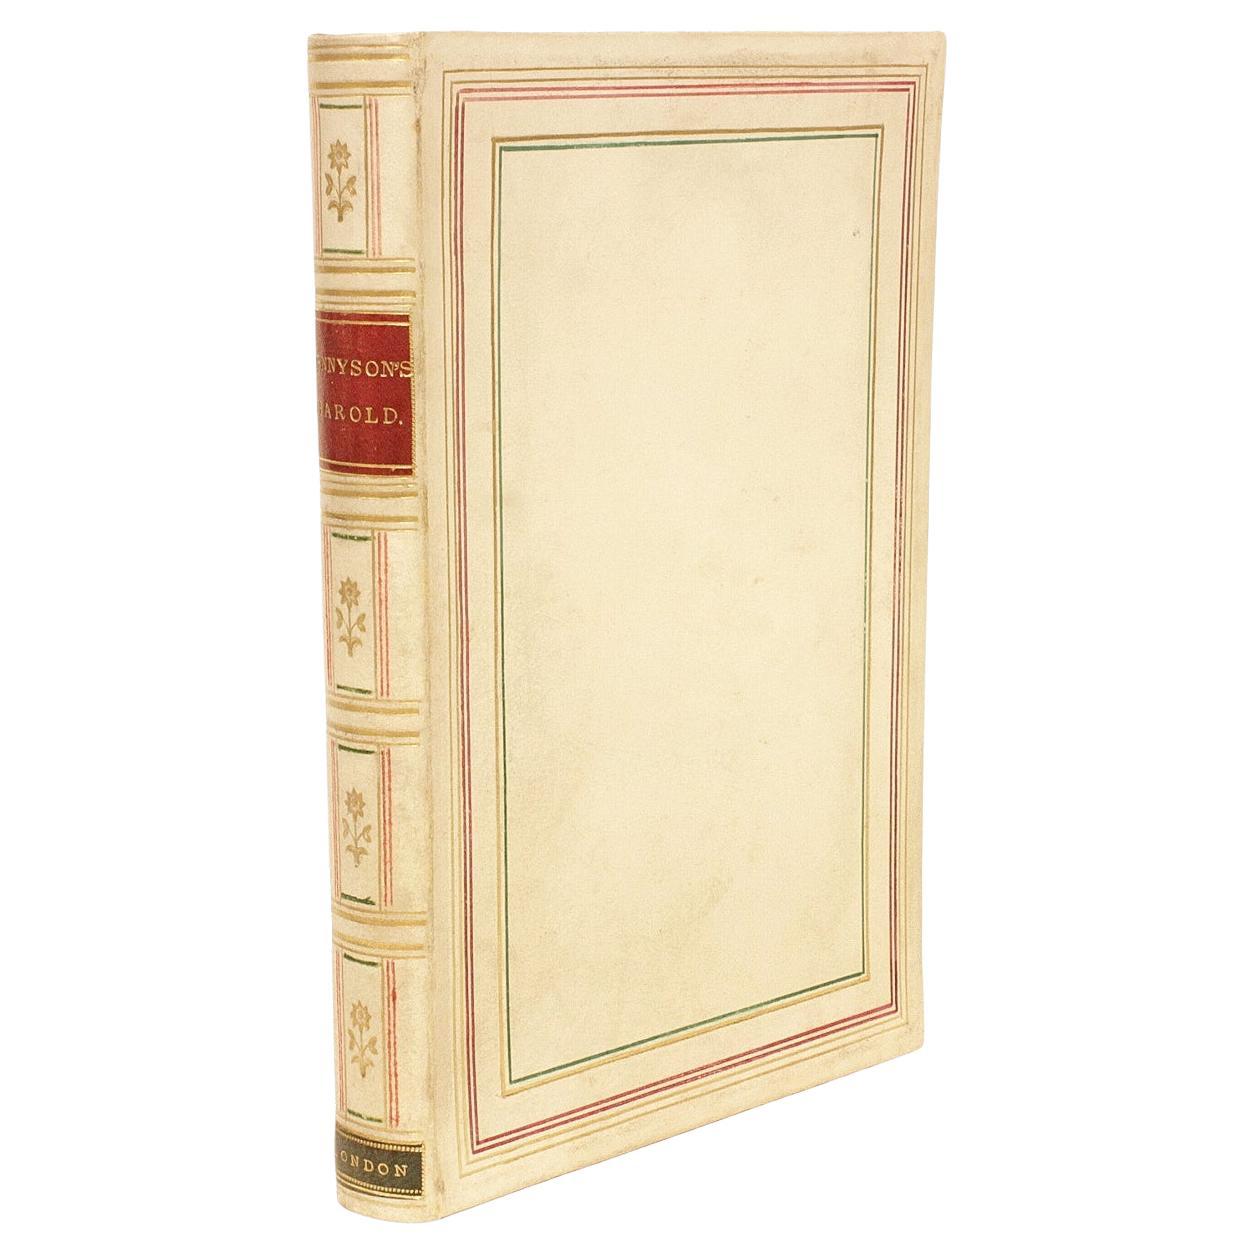 Tennyson, Alfred, Harold a Drama, 1877, Bound in a Fine Full Vellum Binding